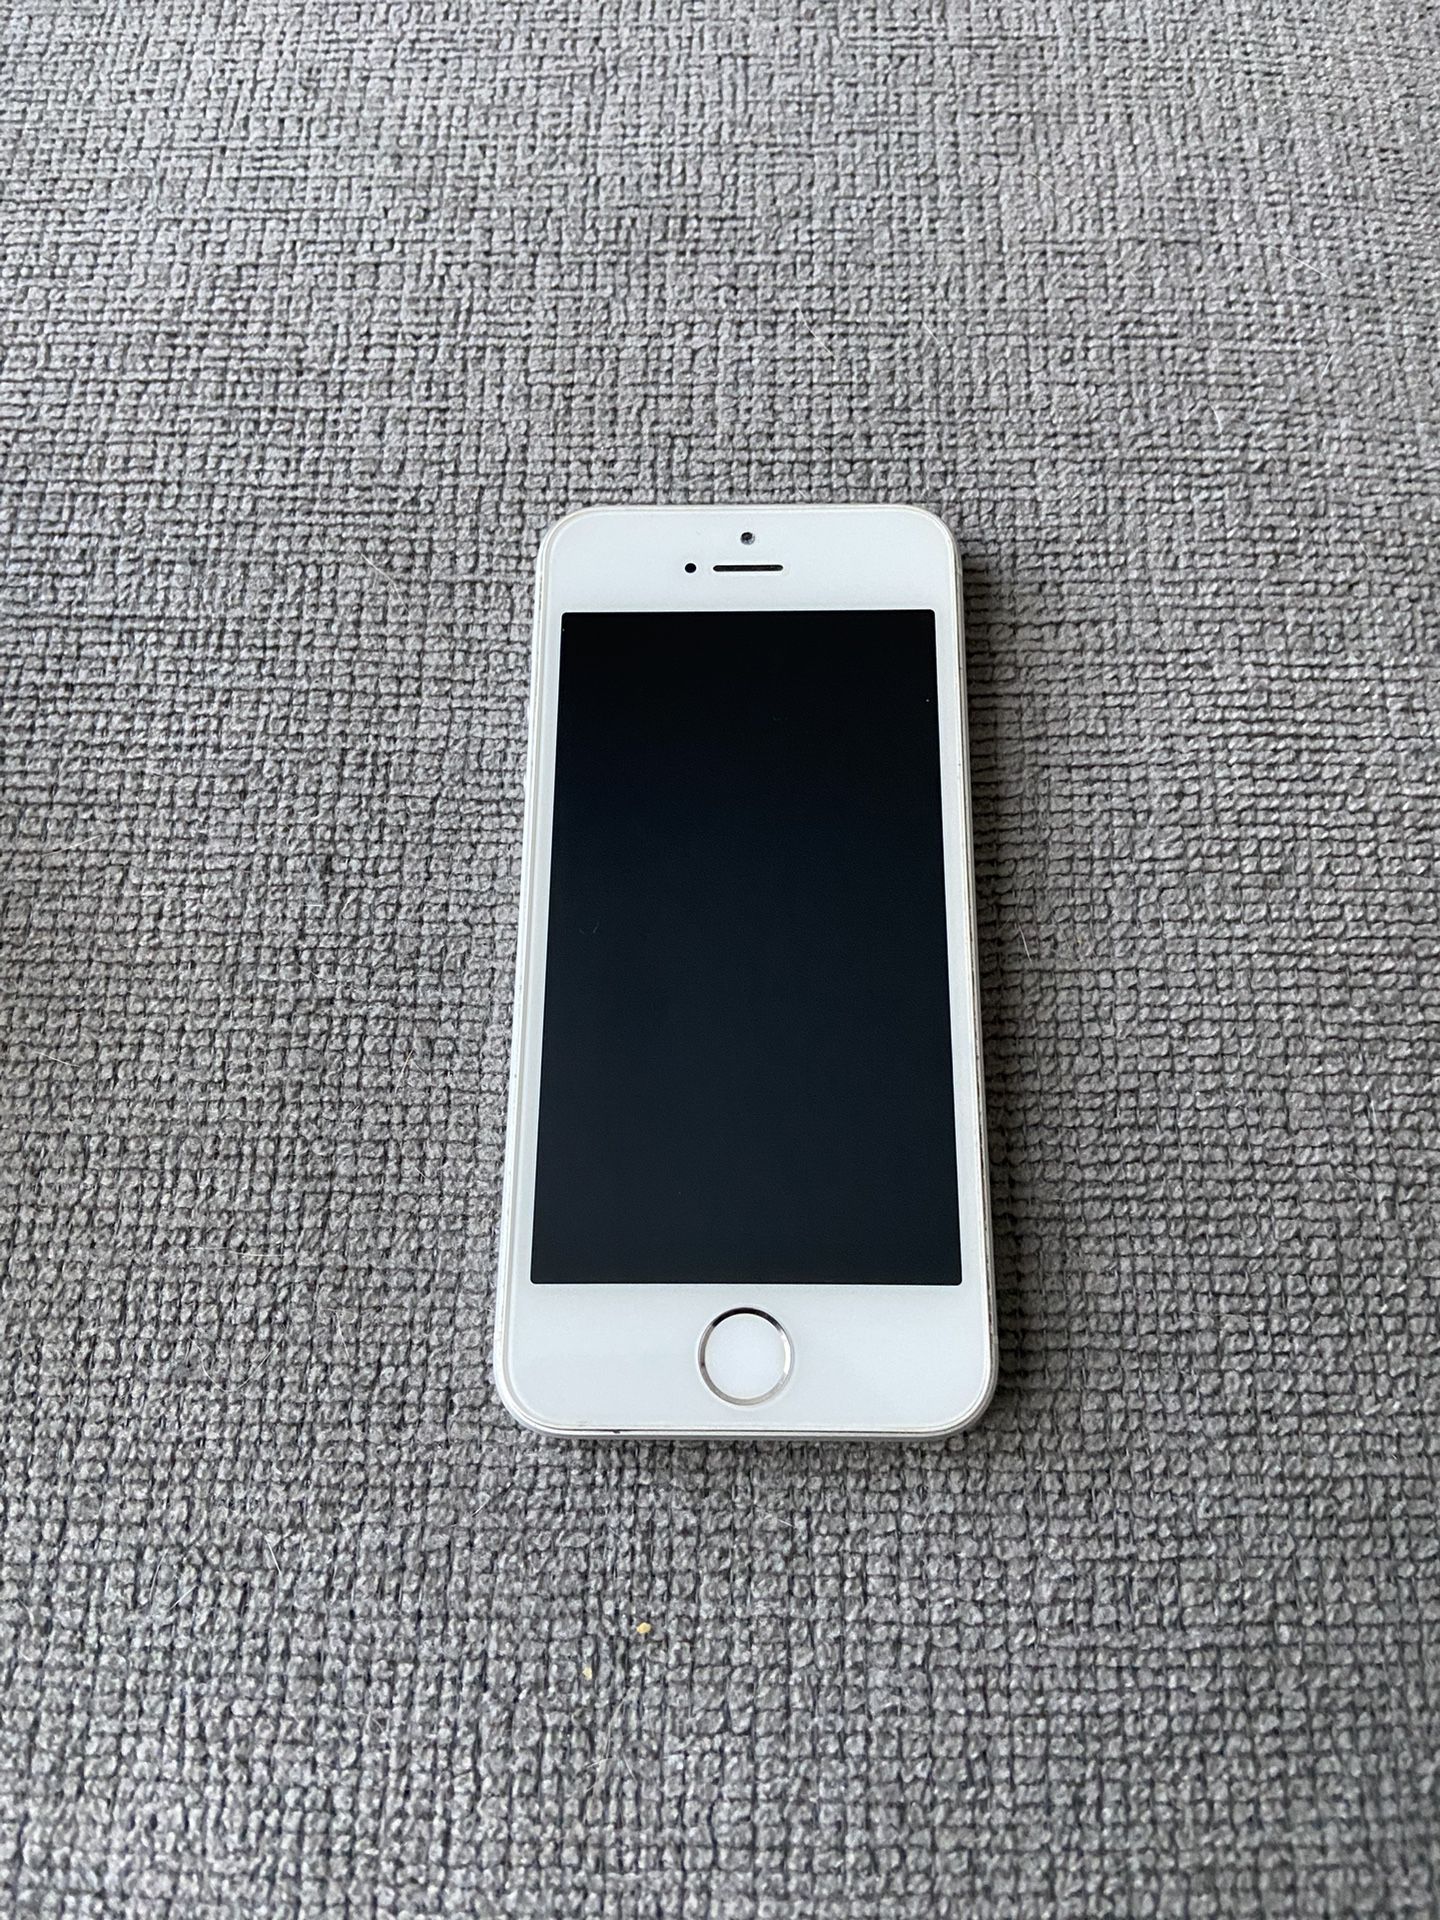 Apple iPhone SE 1st Gen 36GB (Verizon)